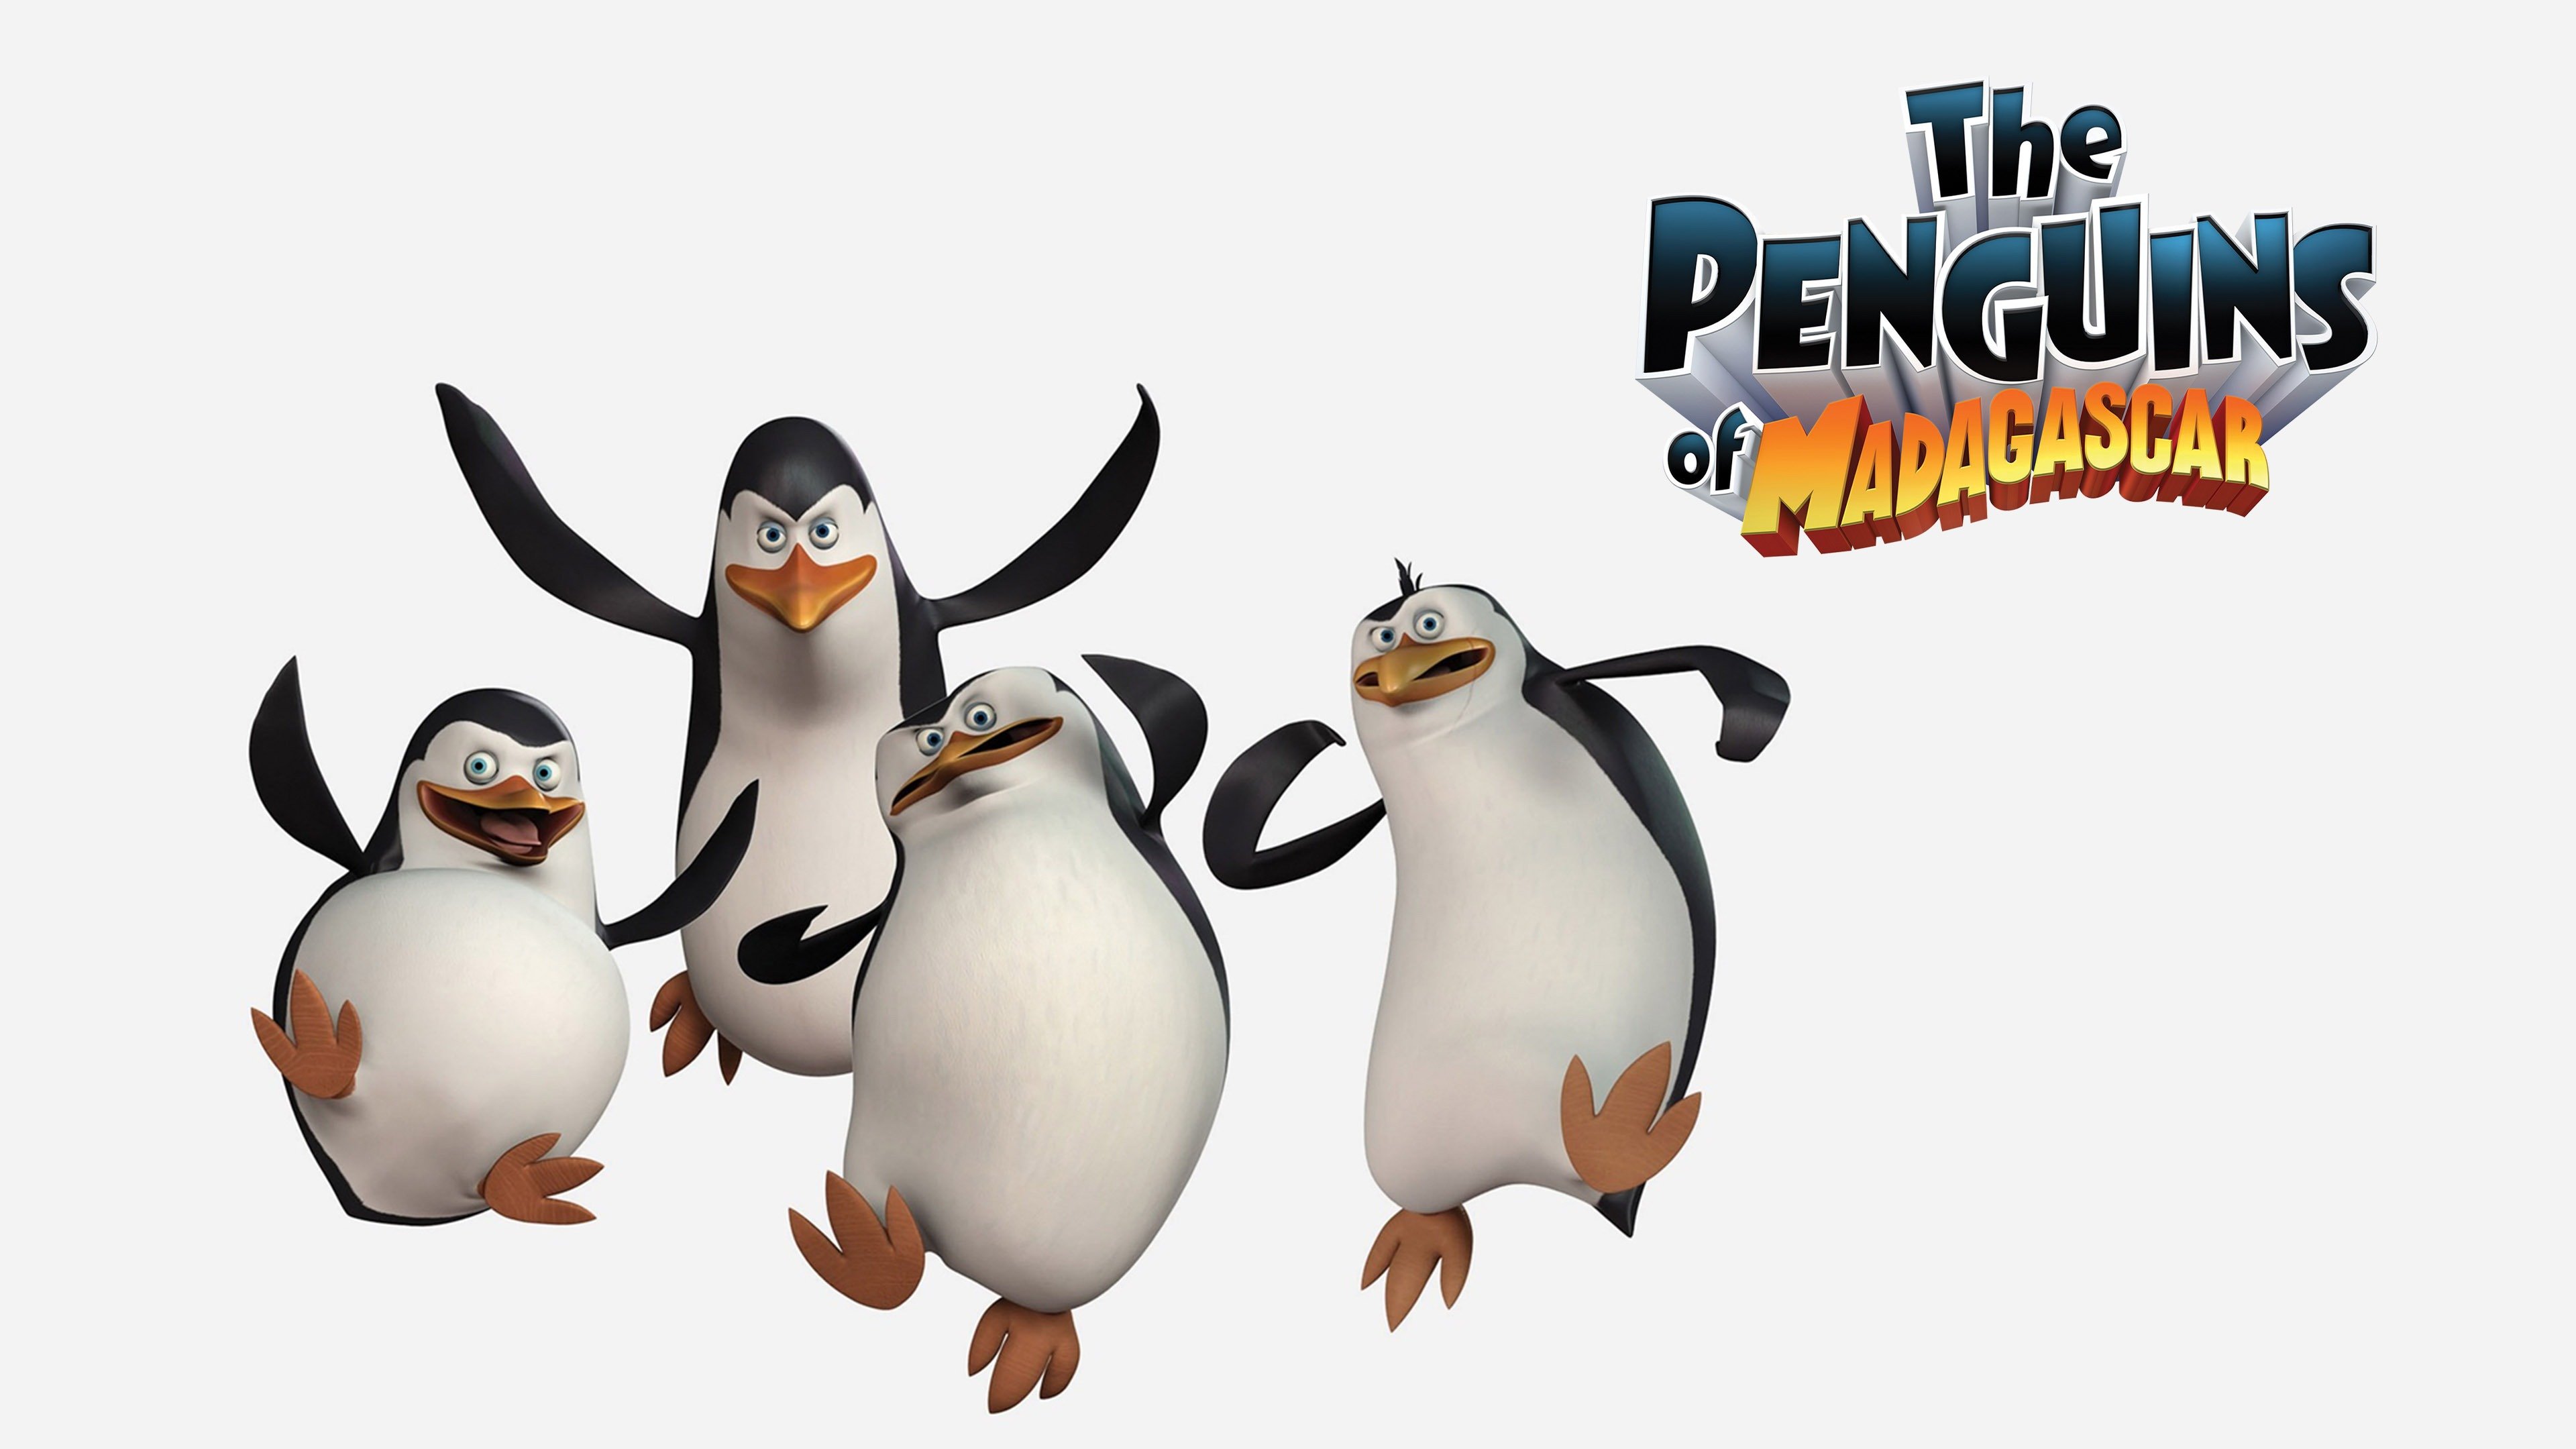 Penguins of madagascar